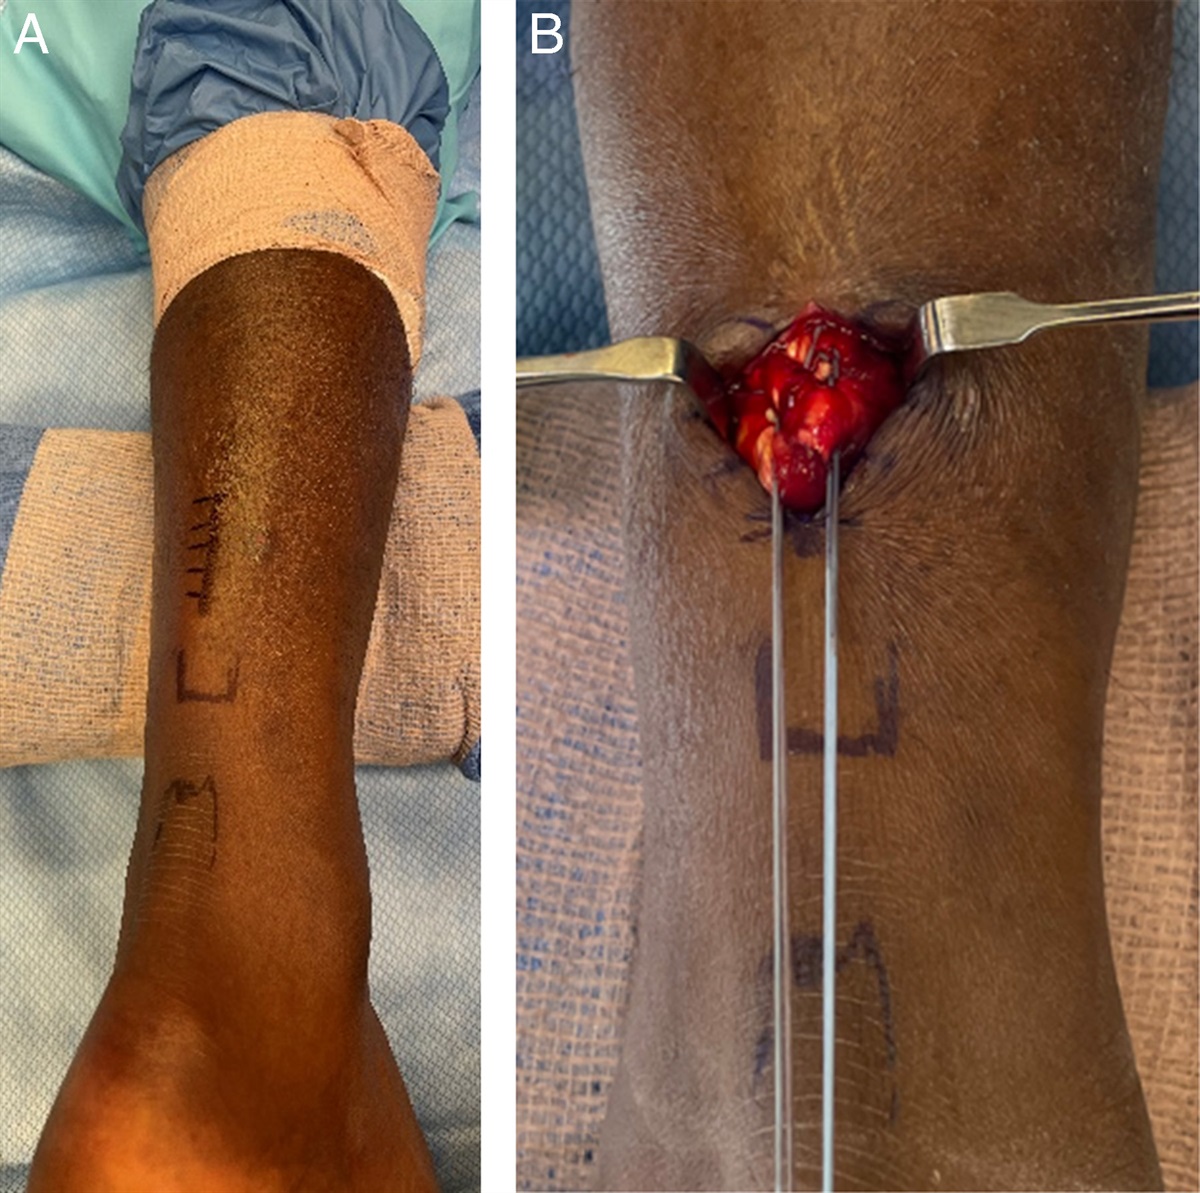 Primary Repair of Achilles Tendon Rupture Using a Mini-incision: A Novel Technique